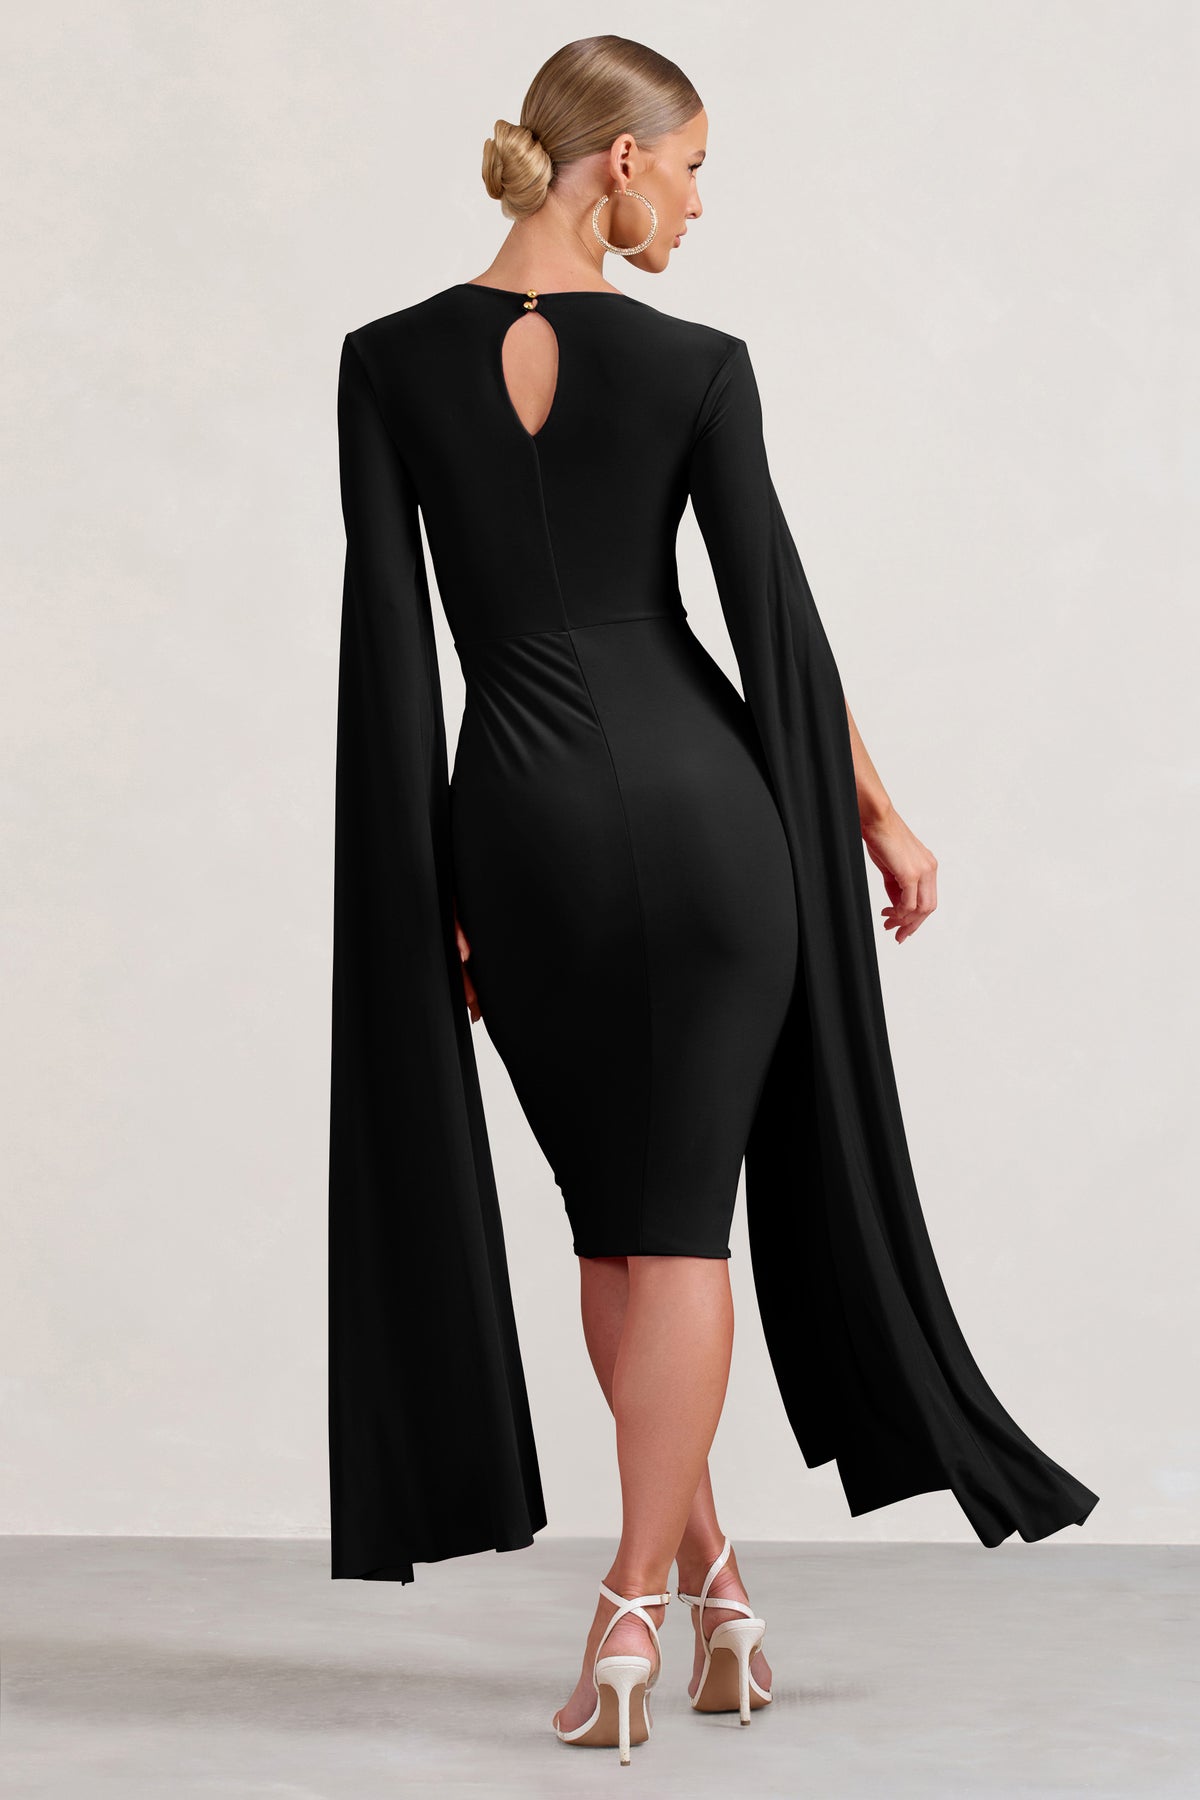 Under Wraps Black Ruched Cut Out Long-Sleeve Midi Dress – Club L London - UK